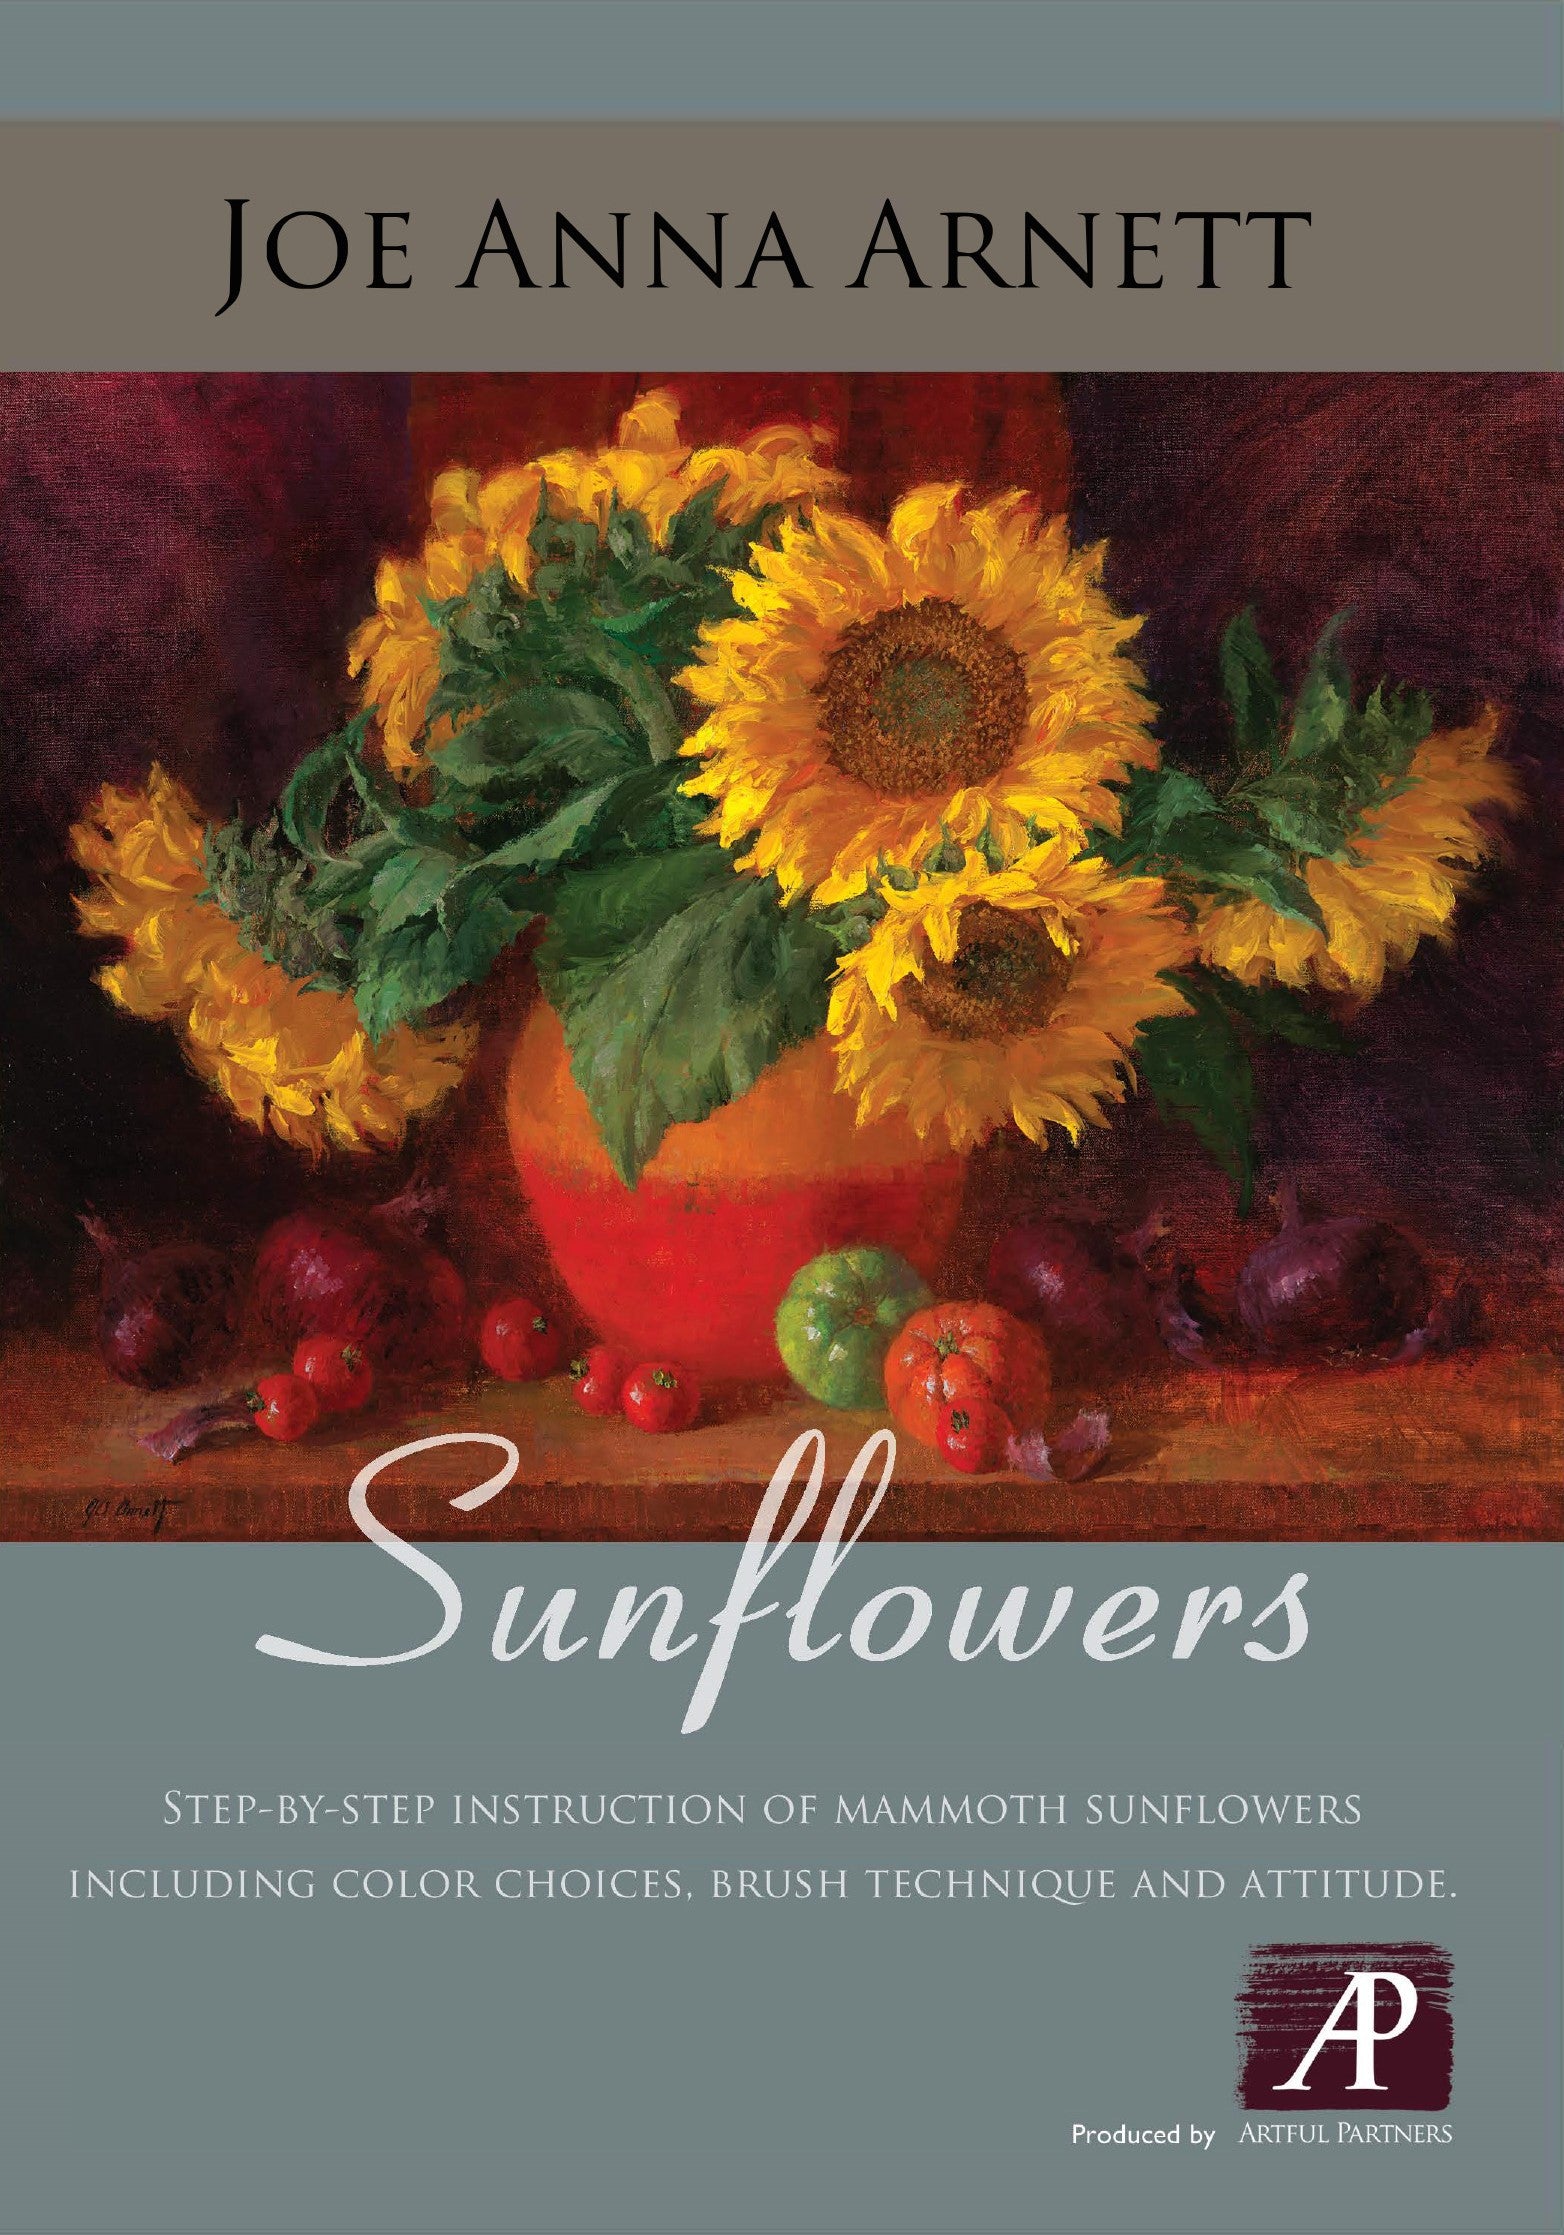 Joe Anna Arnett: Sunflowers